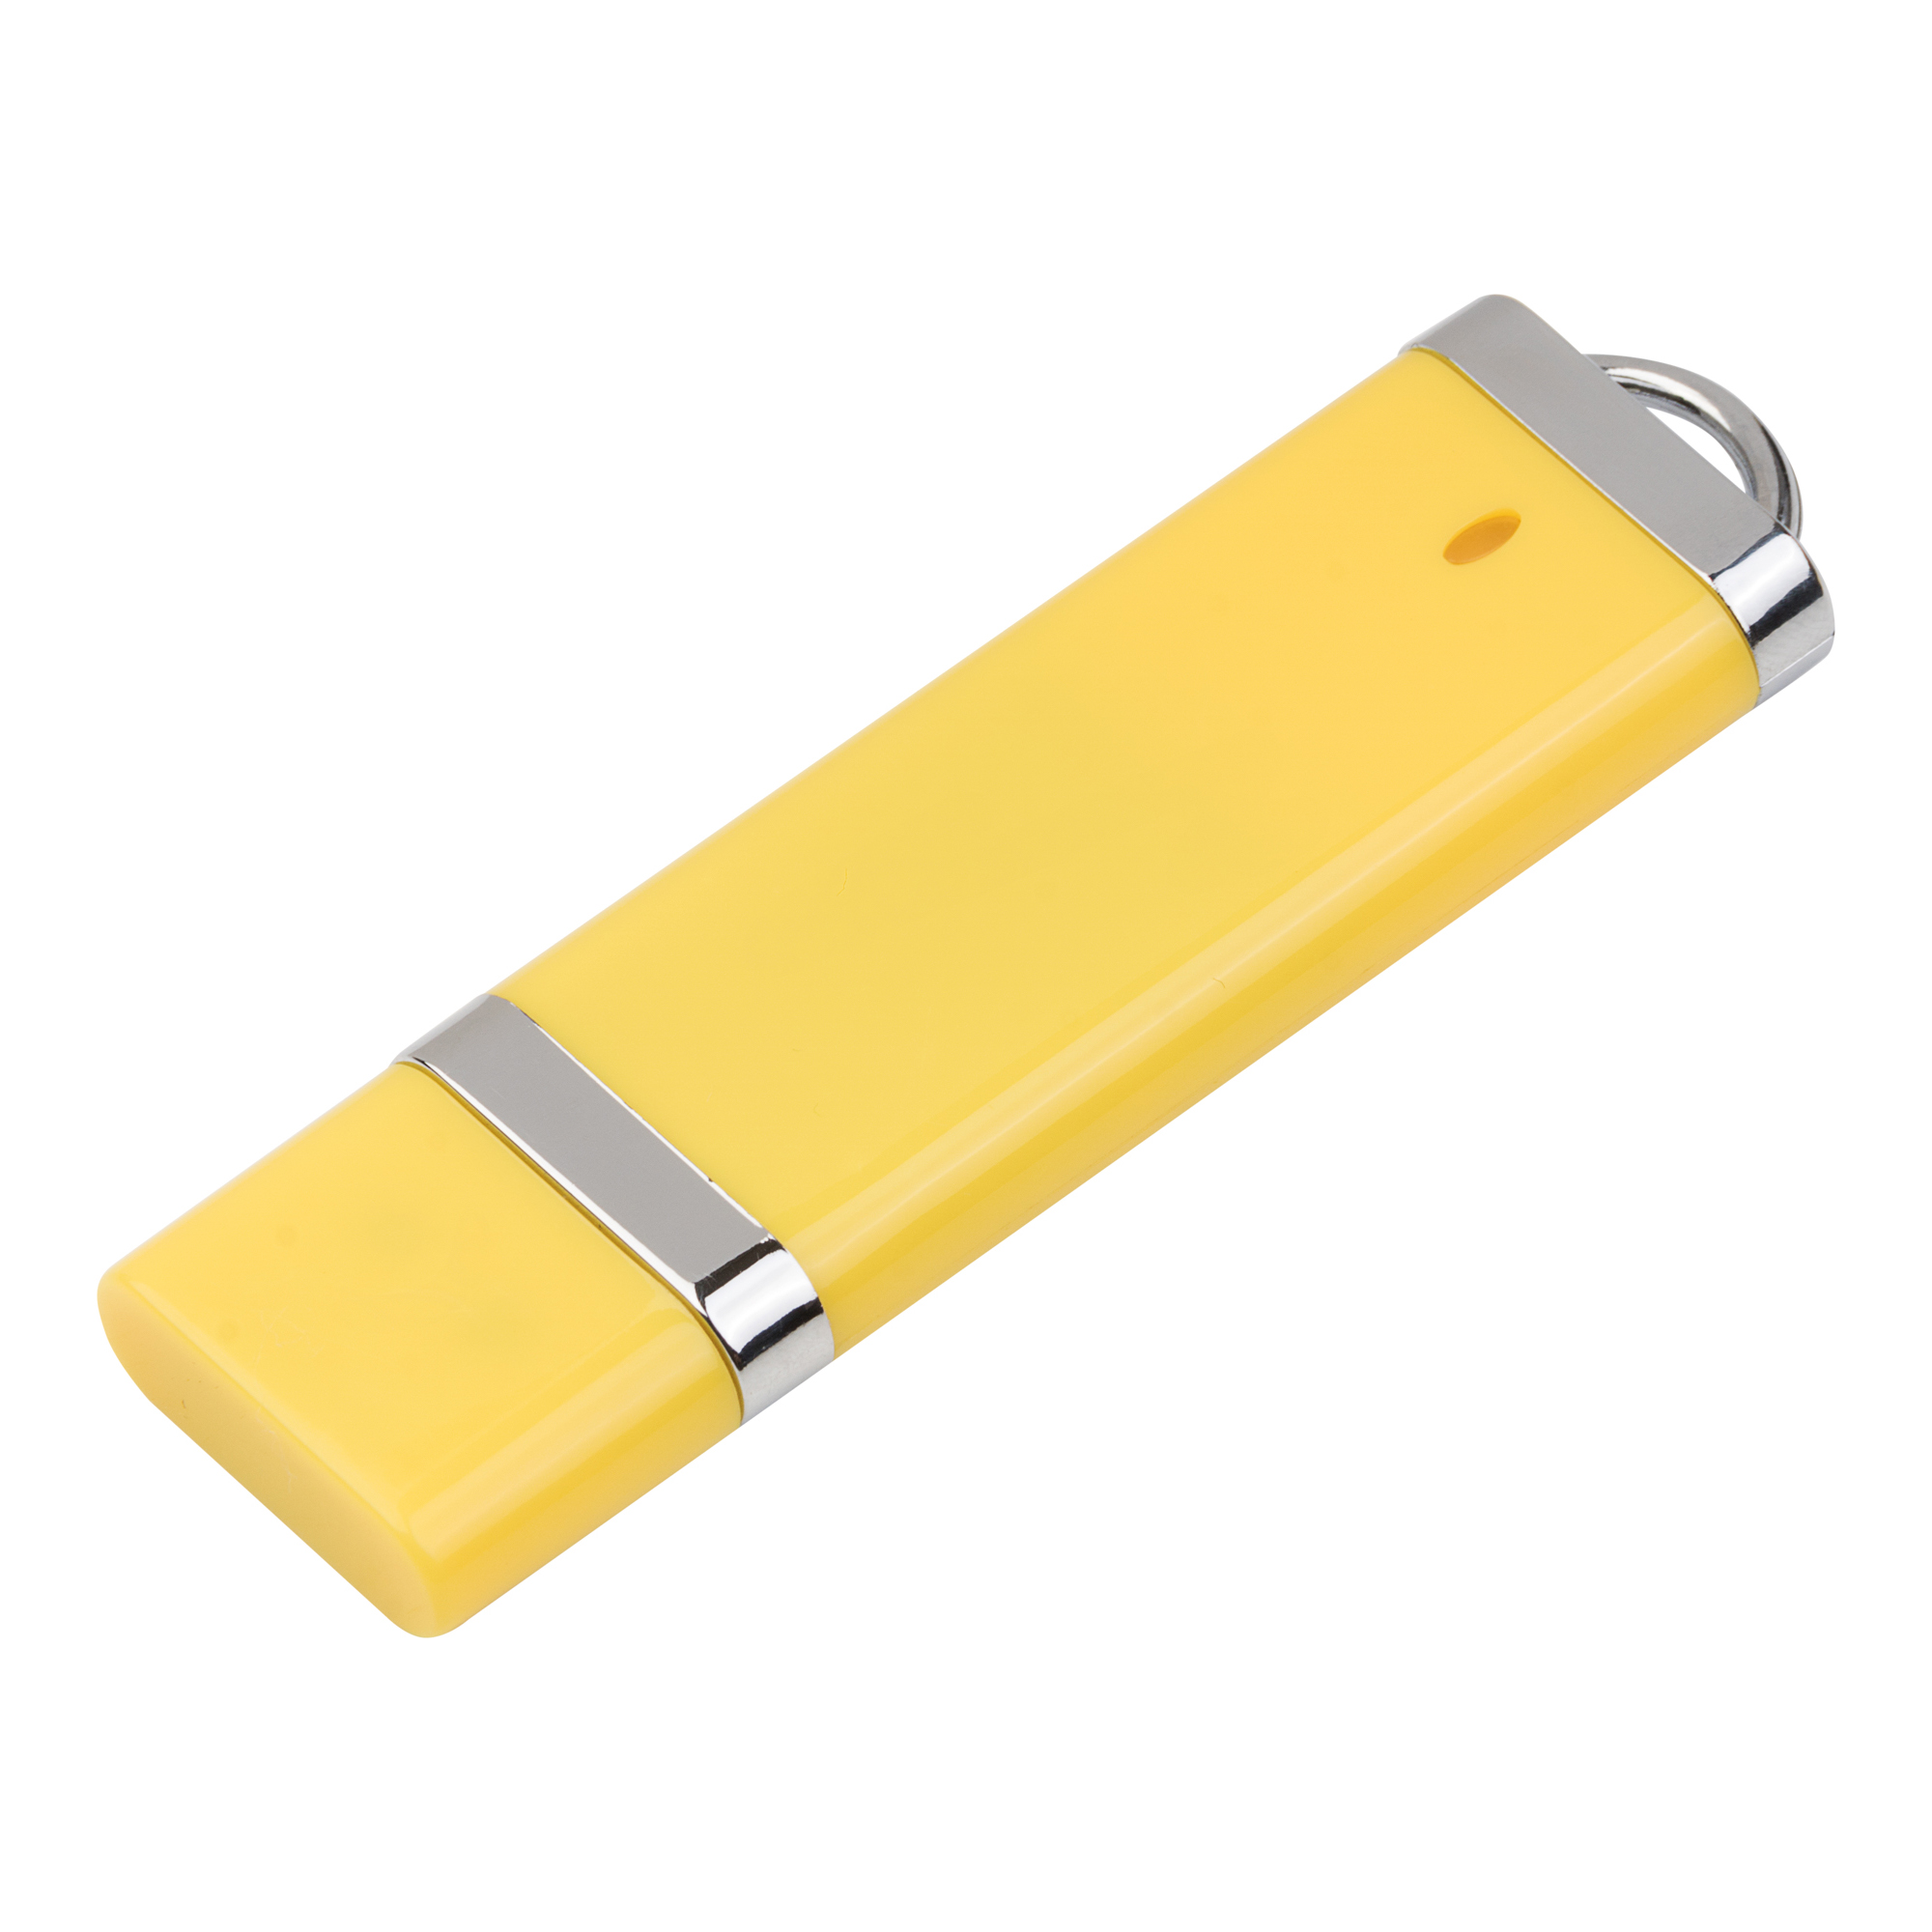 USB-флешка модель 116, (USB 3.0),  объем памяти 8 GB, цвет желтый